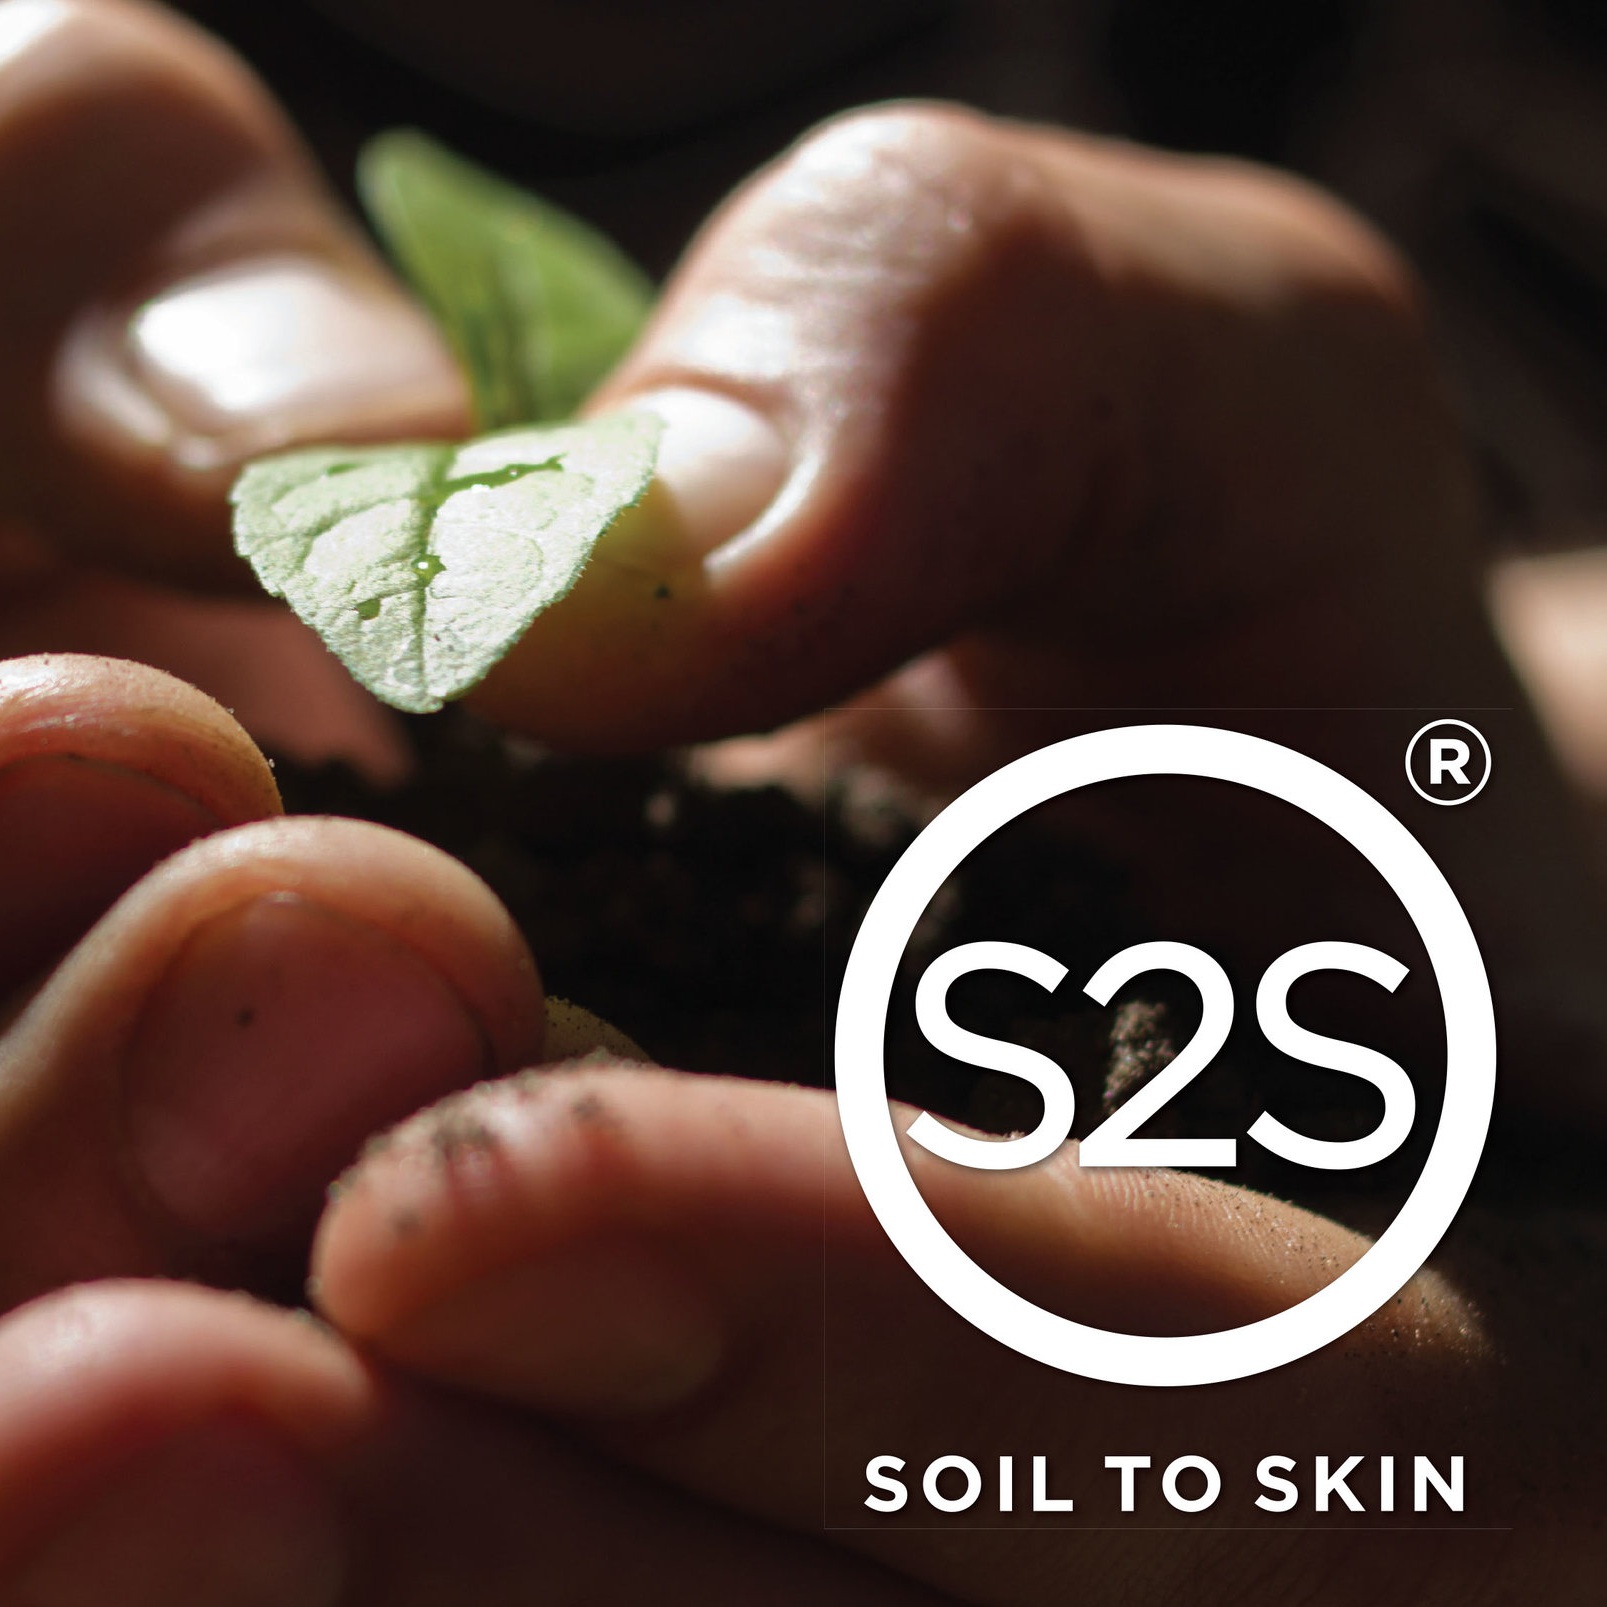 Organic Nation Soil 2 Skin 840x540px x4V2-4.jpg